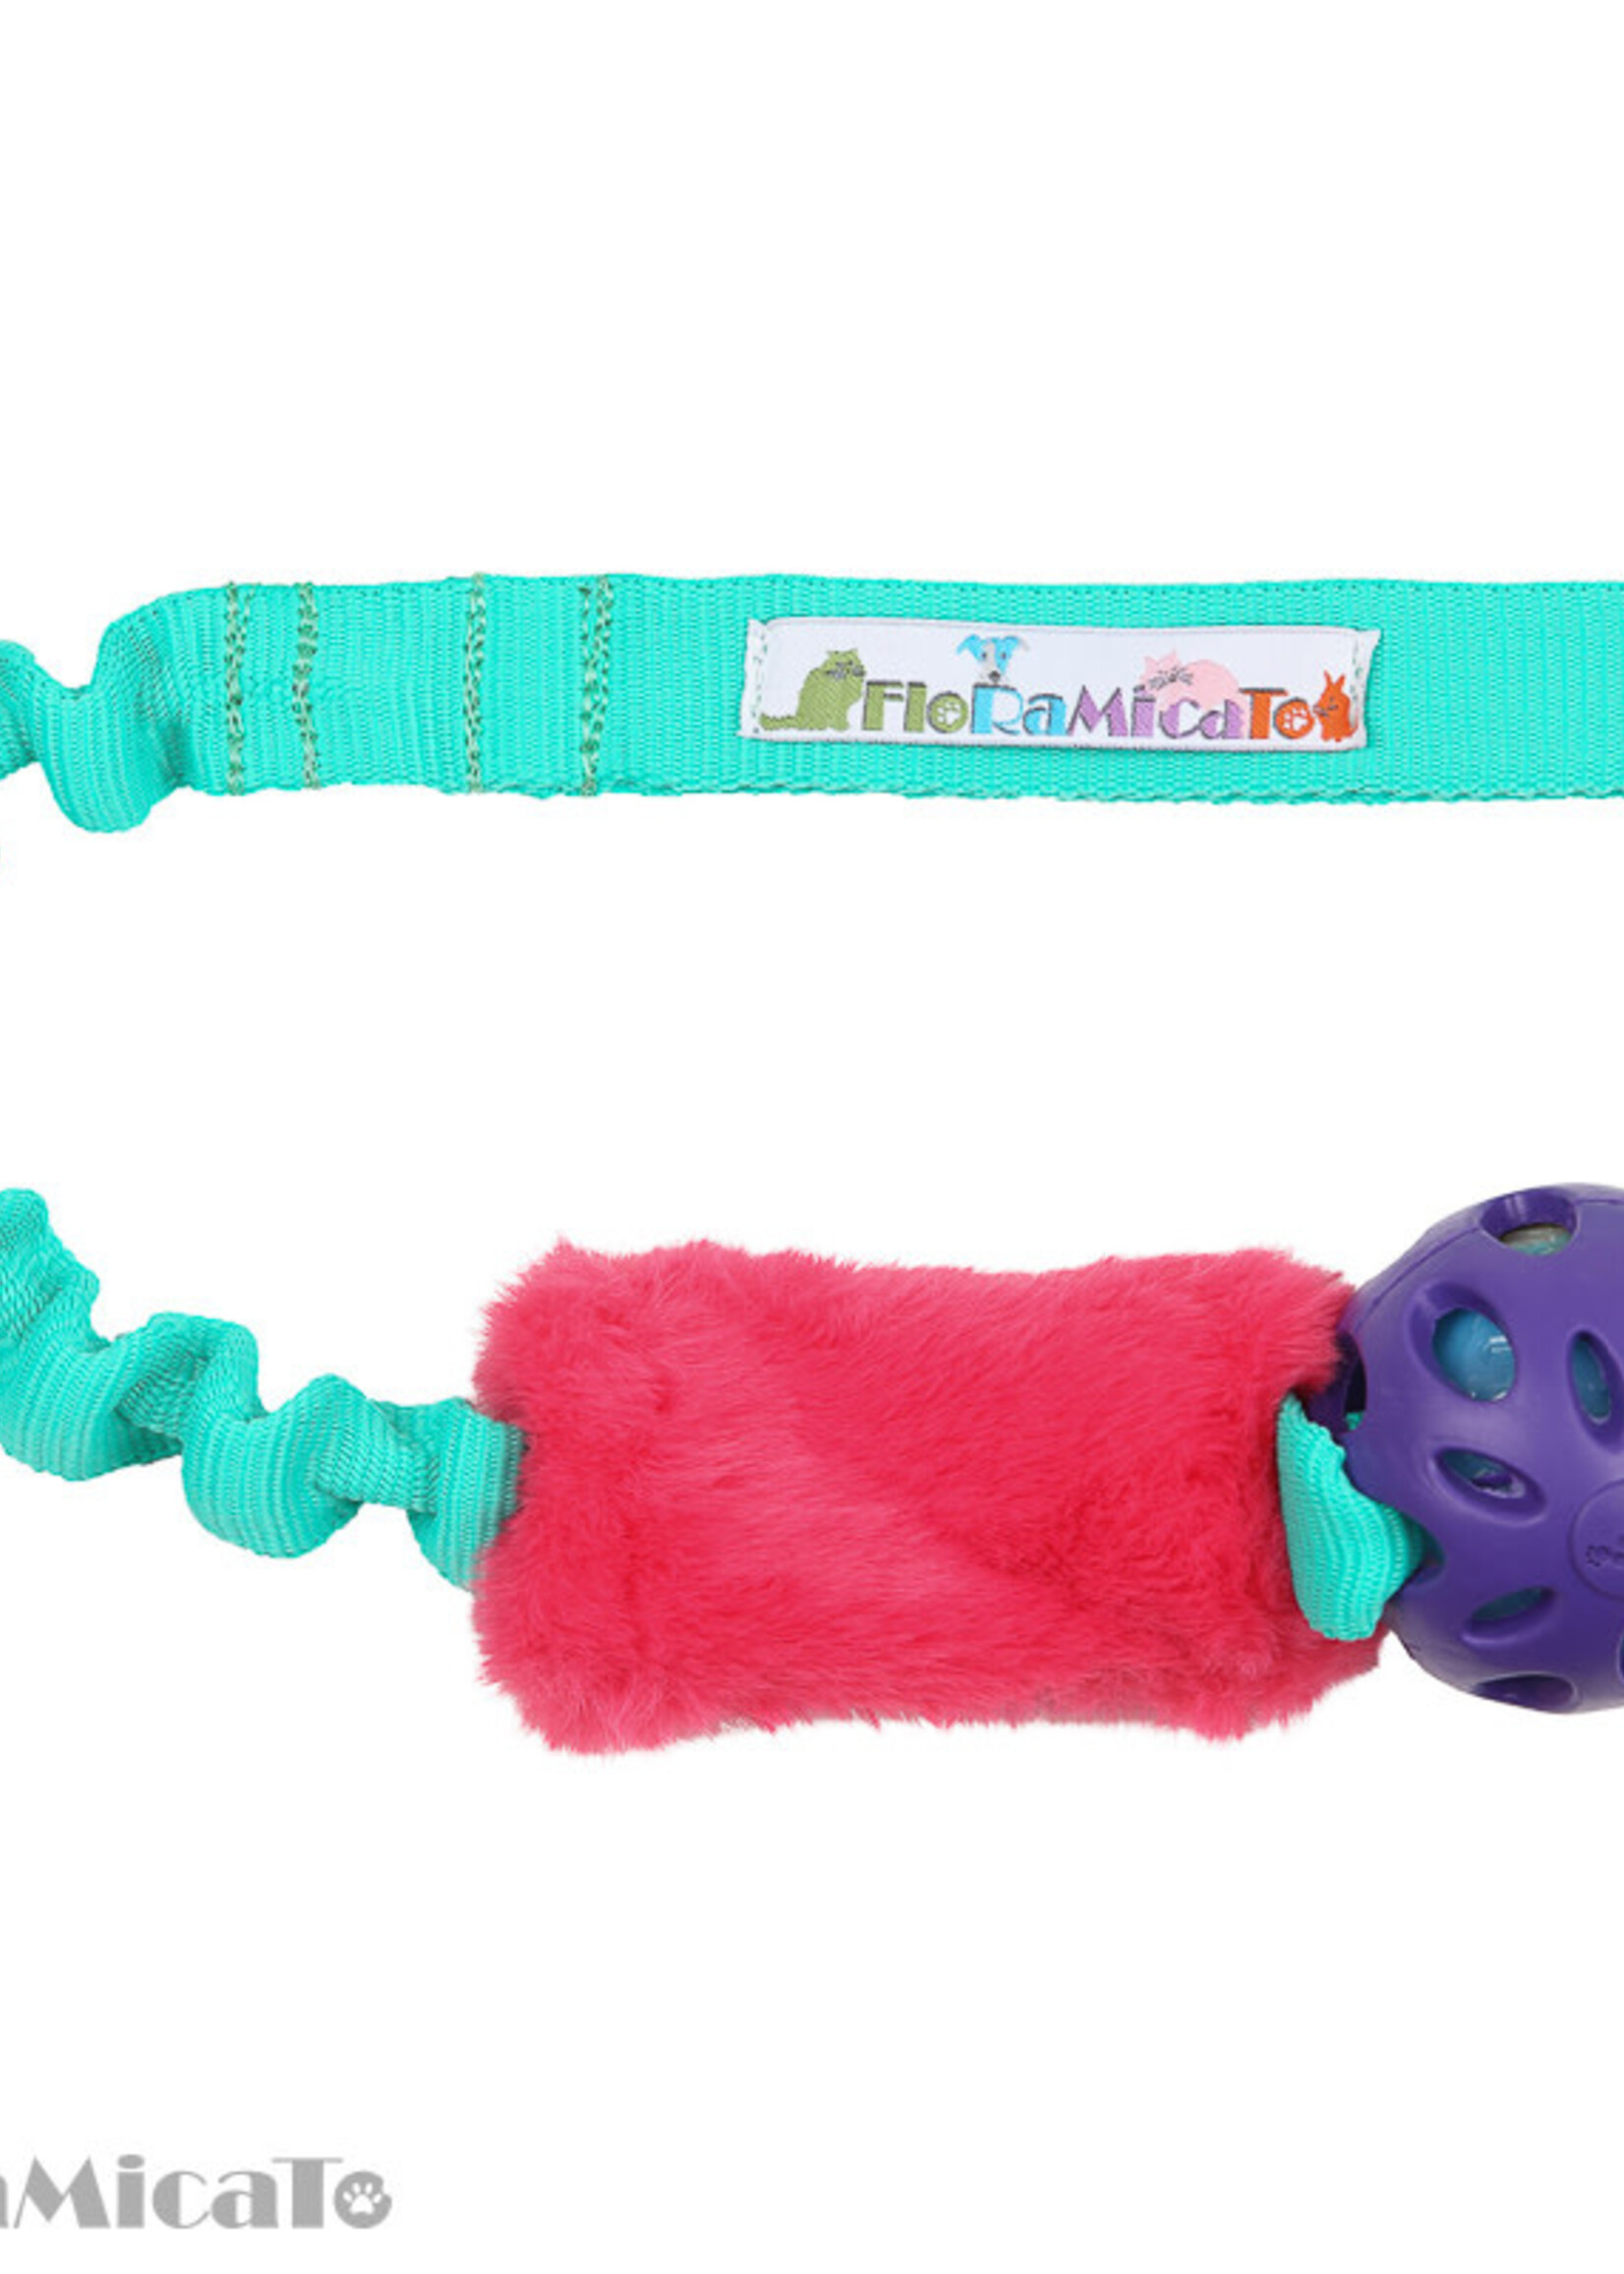 FM25 - Floramicato Toy Fluffy Crackle M/S